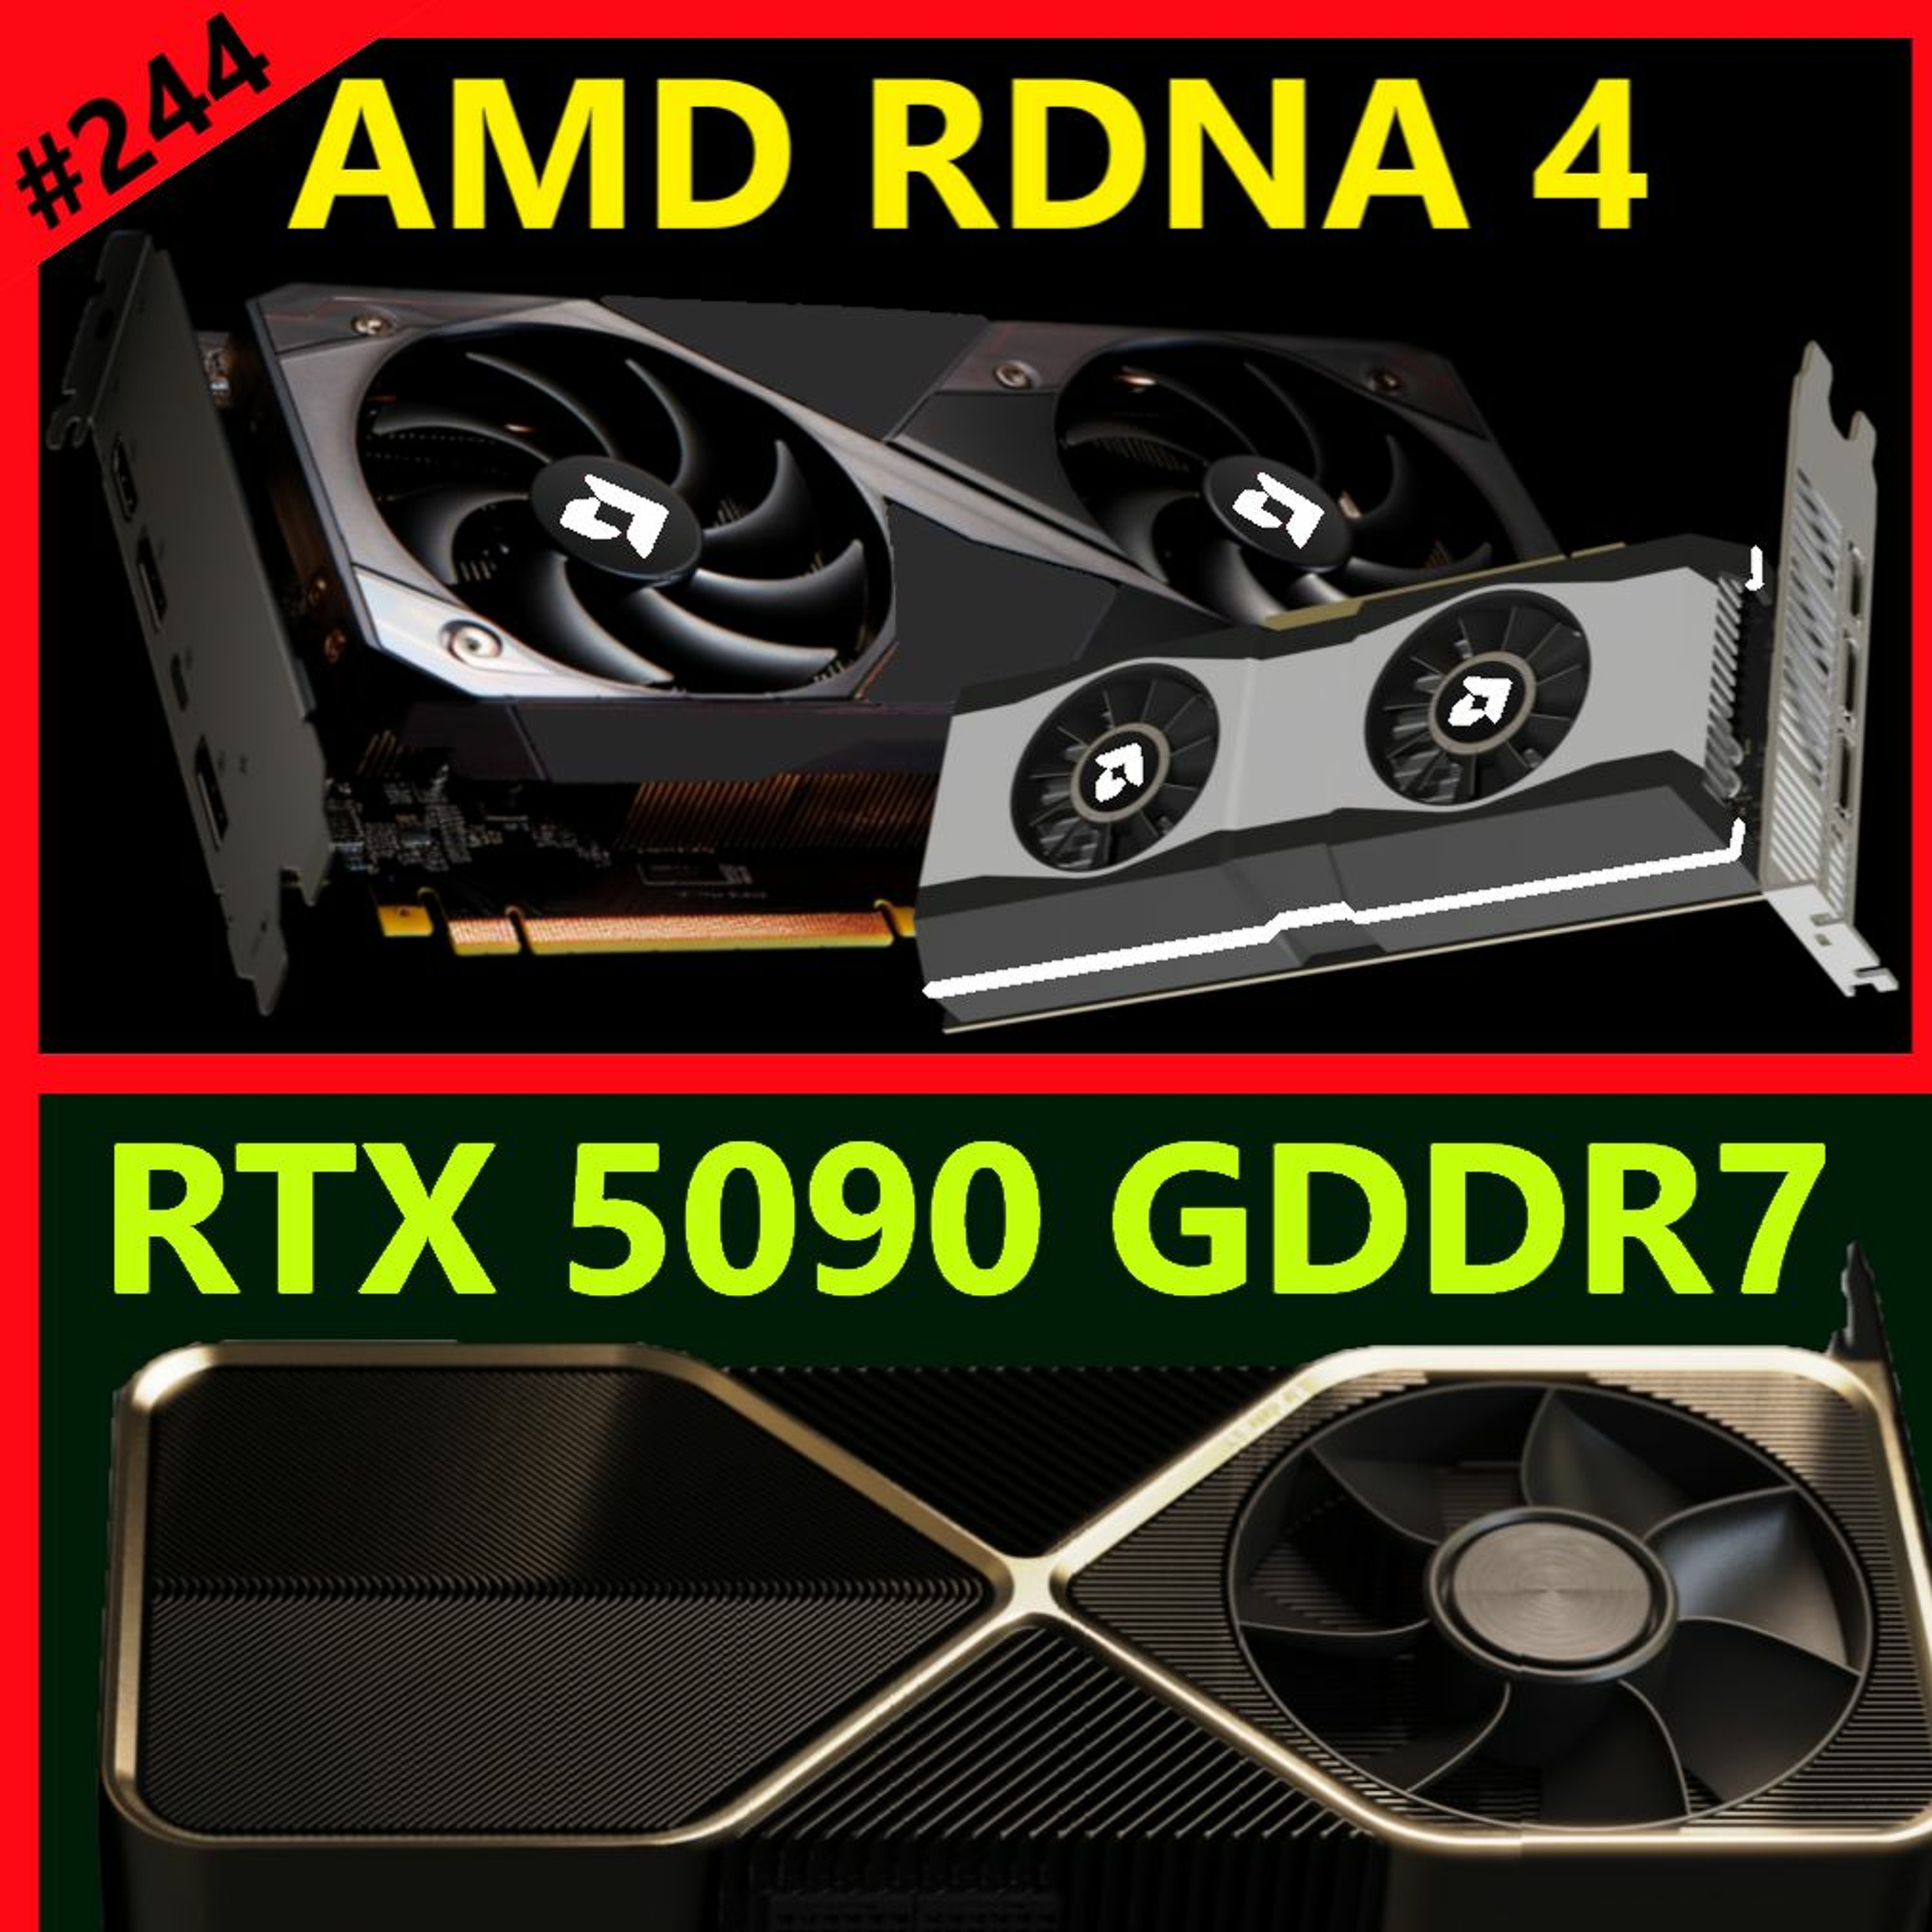 244. AMD RDNA 4, Nvidia RTX 5090 GDDR7, XBOX Chaos Leak, PS5 Pro Price, Apple Vision